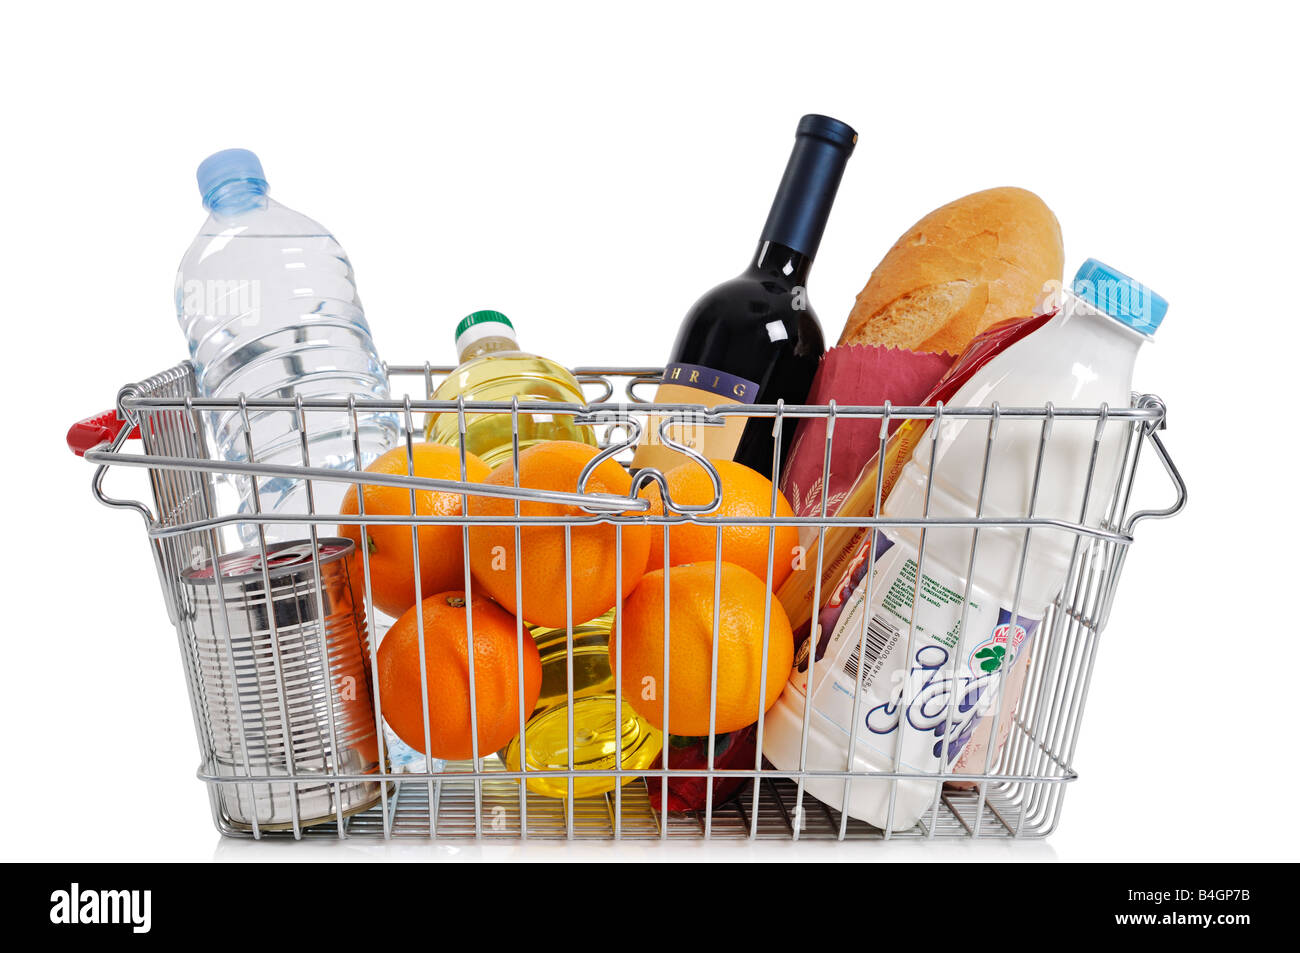 Shopping Basket Full of Groceries Stock Photo